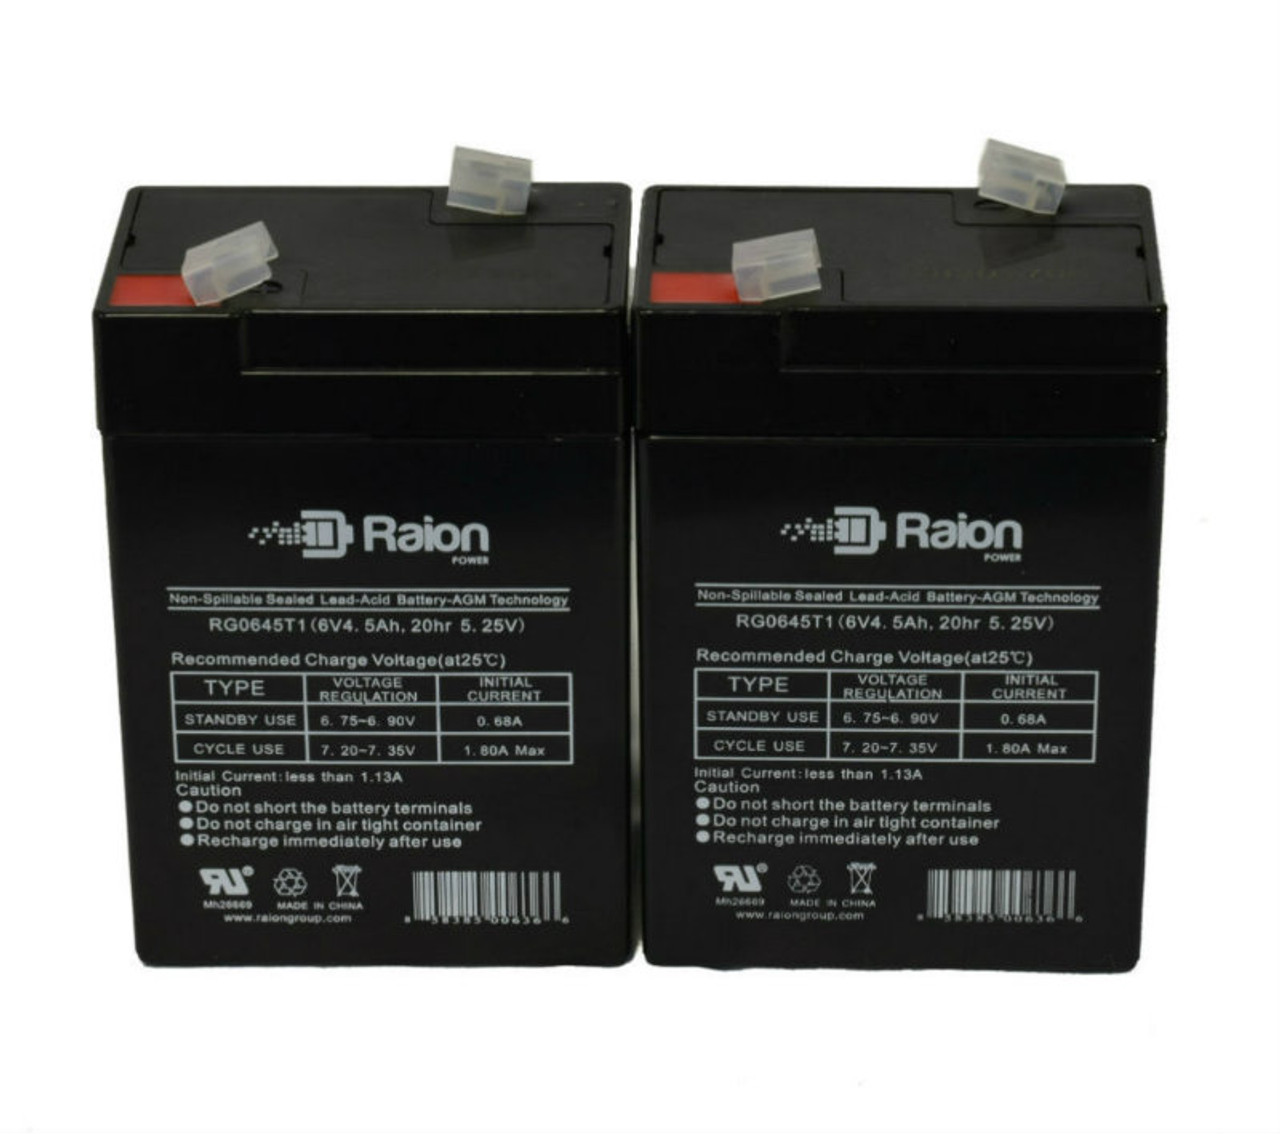 Raion Power RG0645T1 6V 4.5Ah Replacement Medical Equipment Battery for B. Braun 522 Intell Pump - 2 Pack